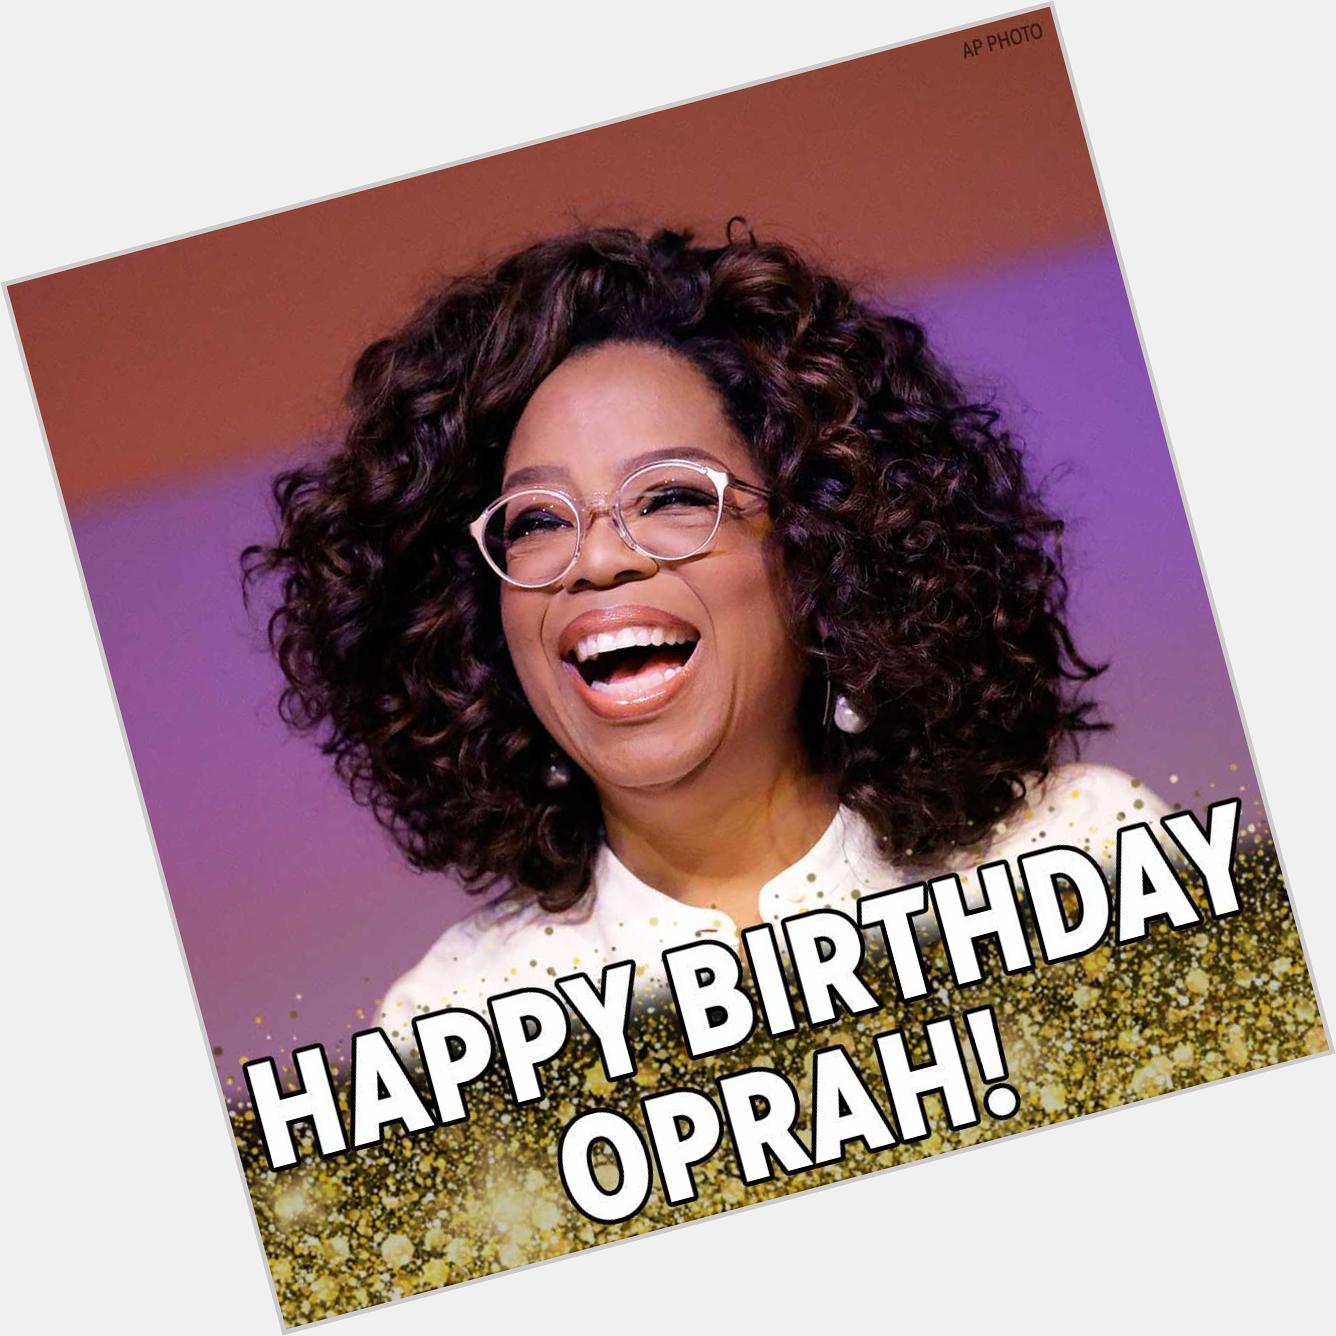 Happy Birthday, Oprah Winfrey! The media mogul and former talk show host turns 65 today. 